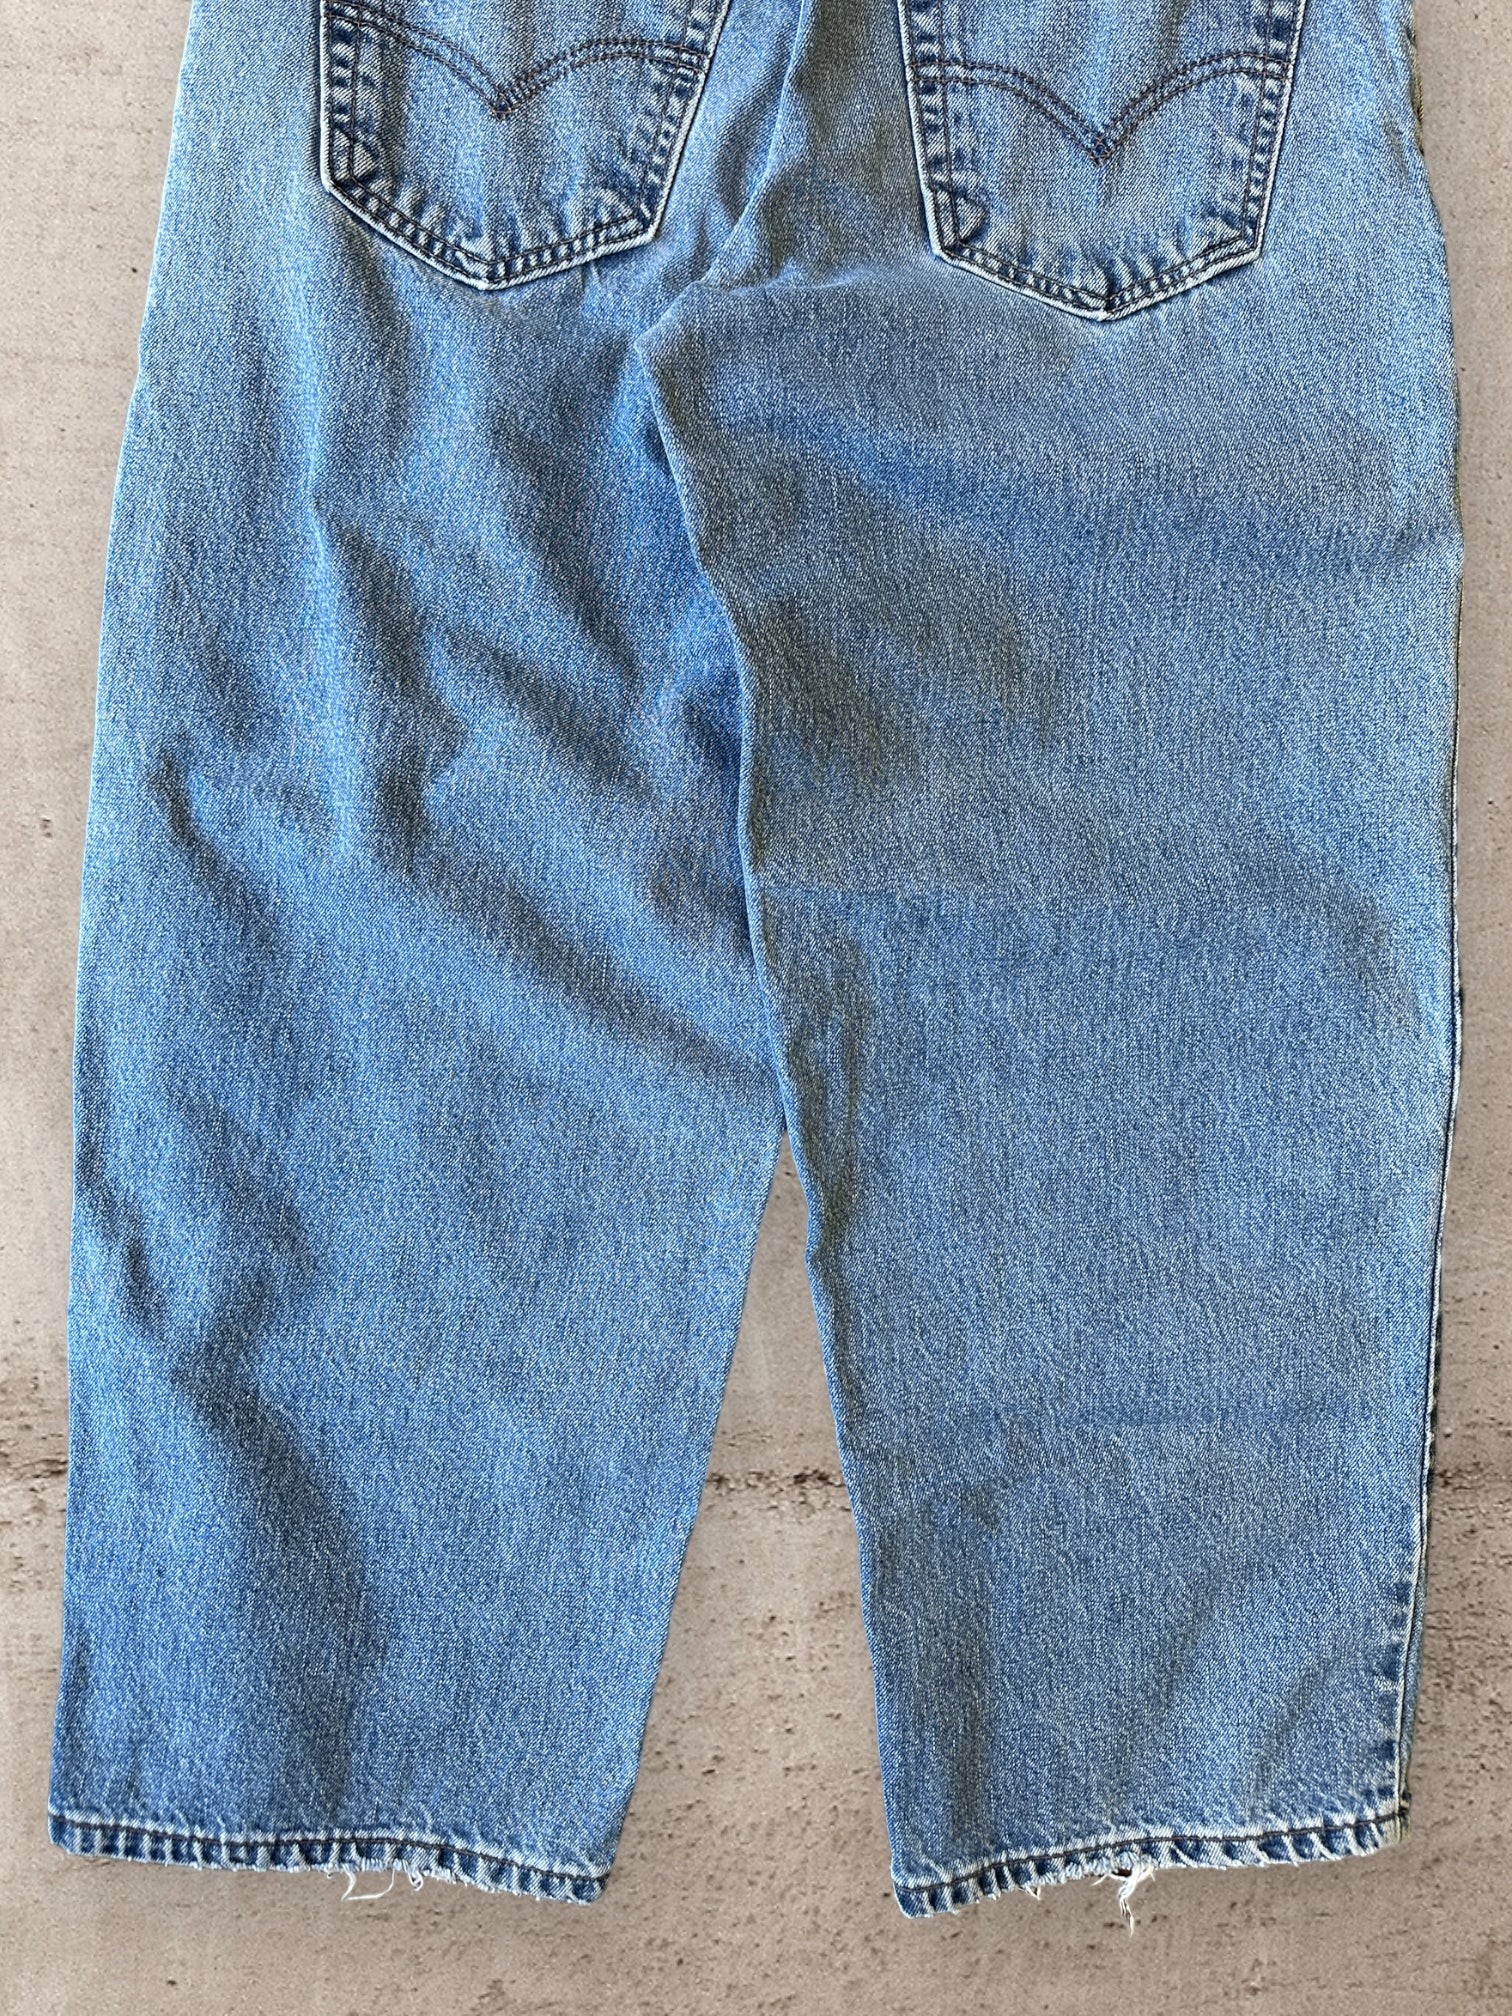 Vintage Levi SilverTab Baggy Jeans - 33x26